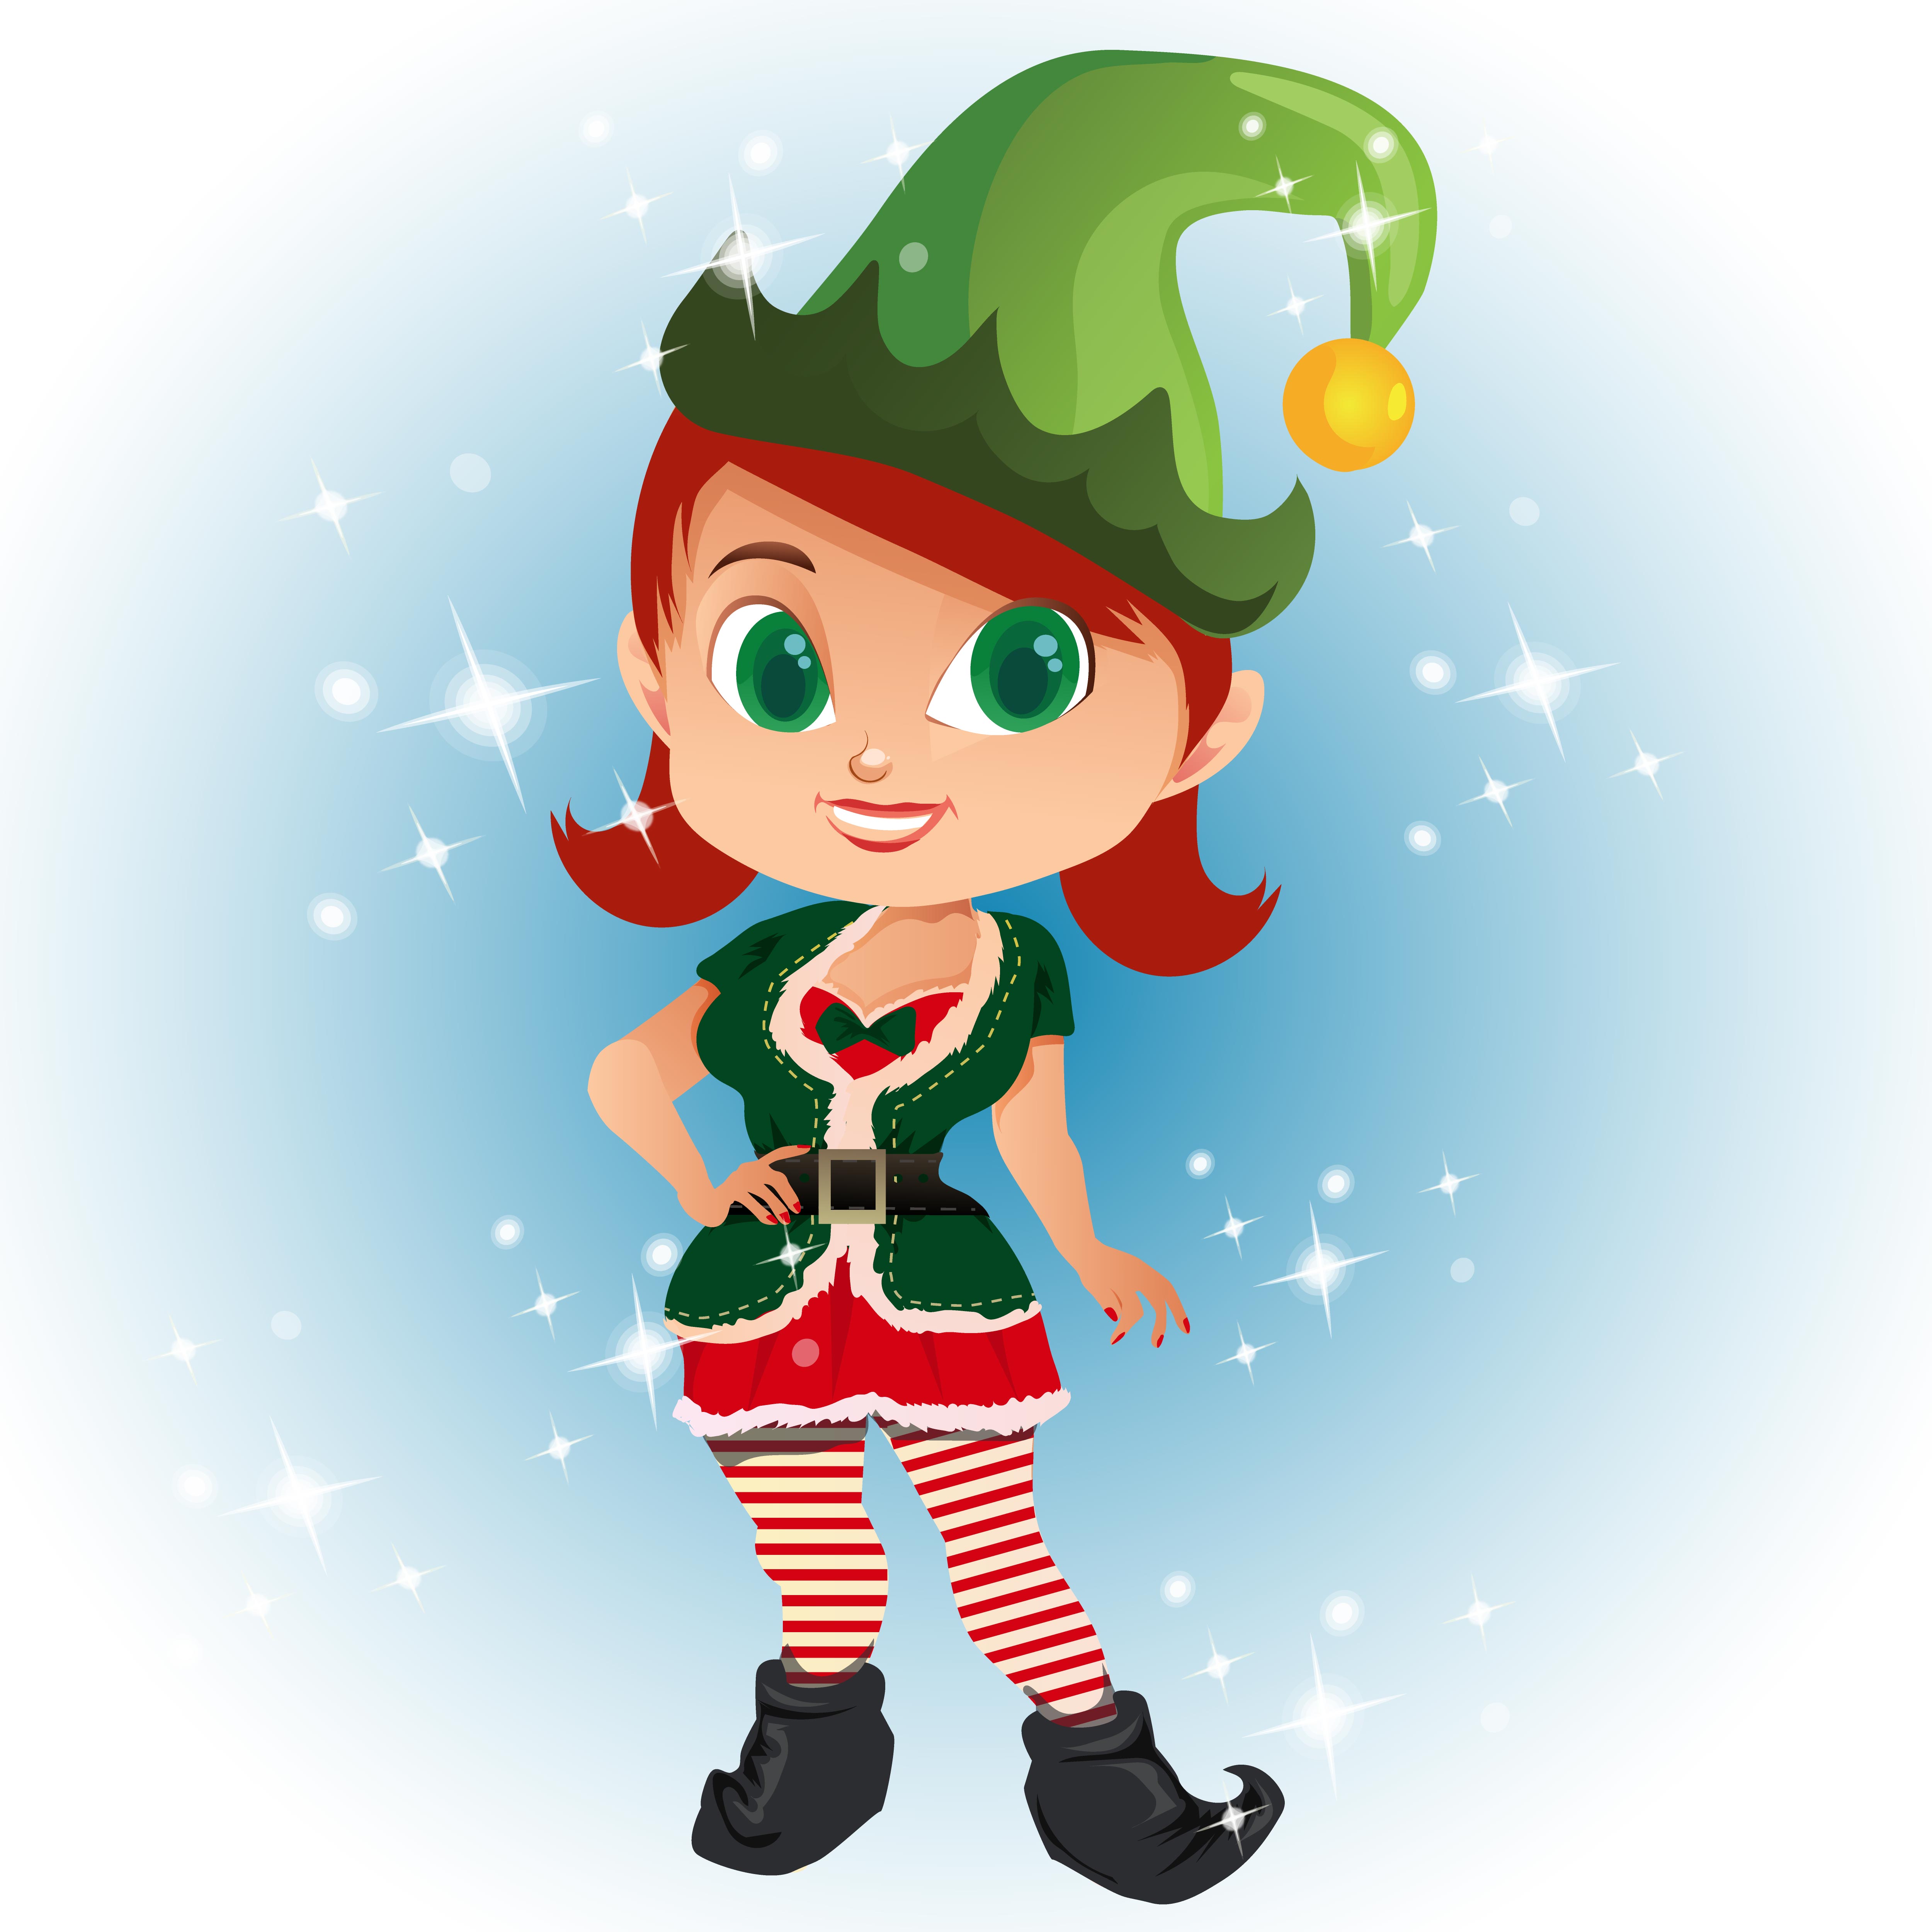 avatar cartoon with elf costume - Download Free Vectors, Clipart ...